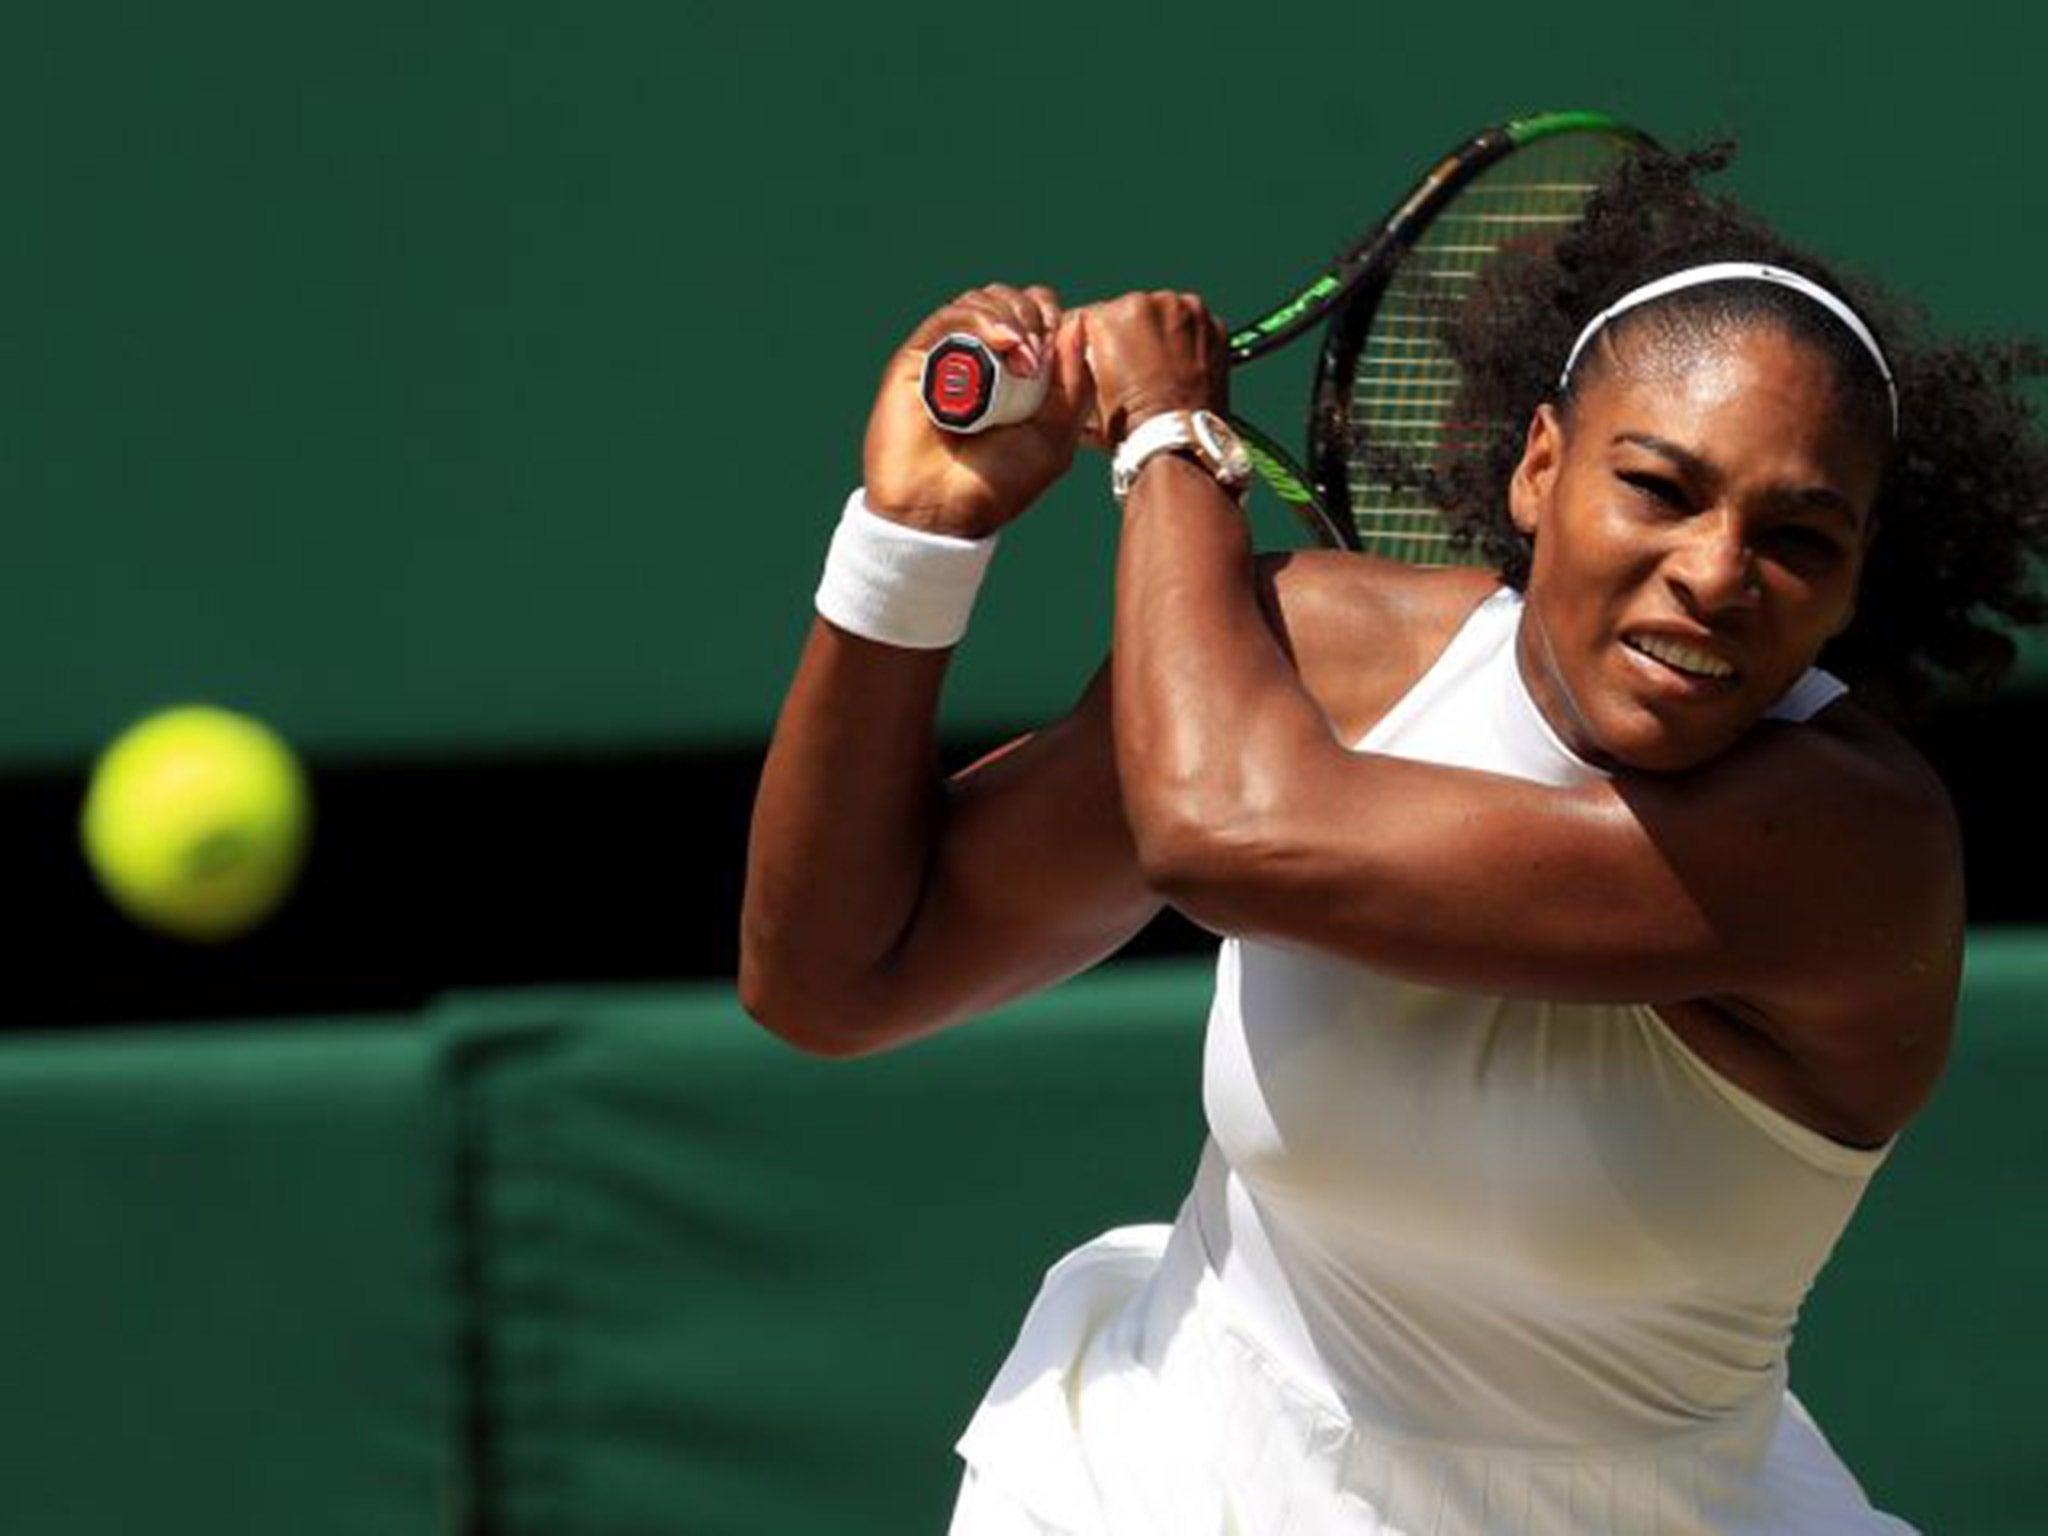 Serena Williams beat Elena Vesnina 6-2, 6-0 to reach the women's Wimbledon final